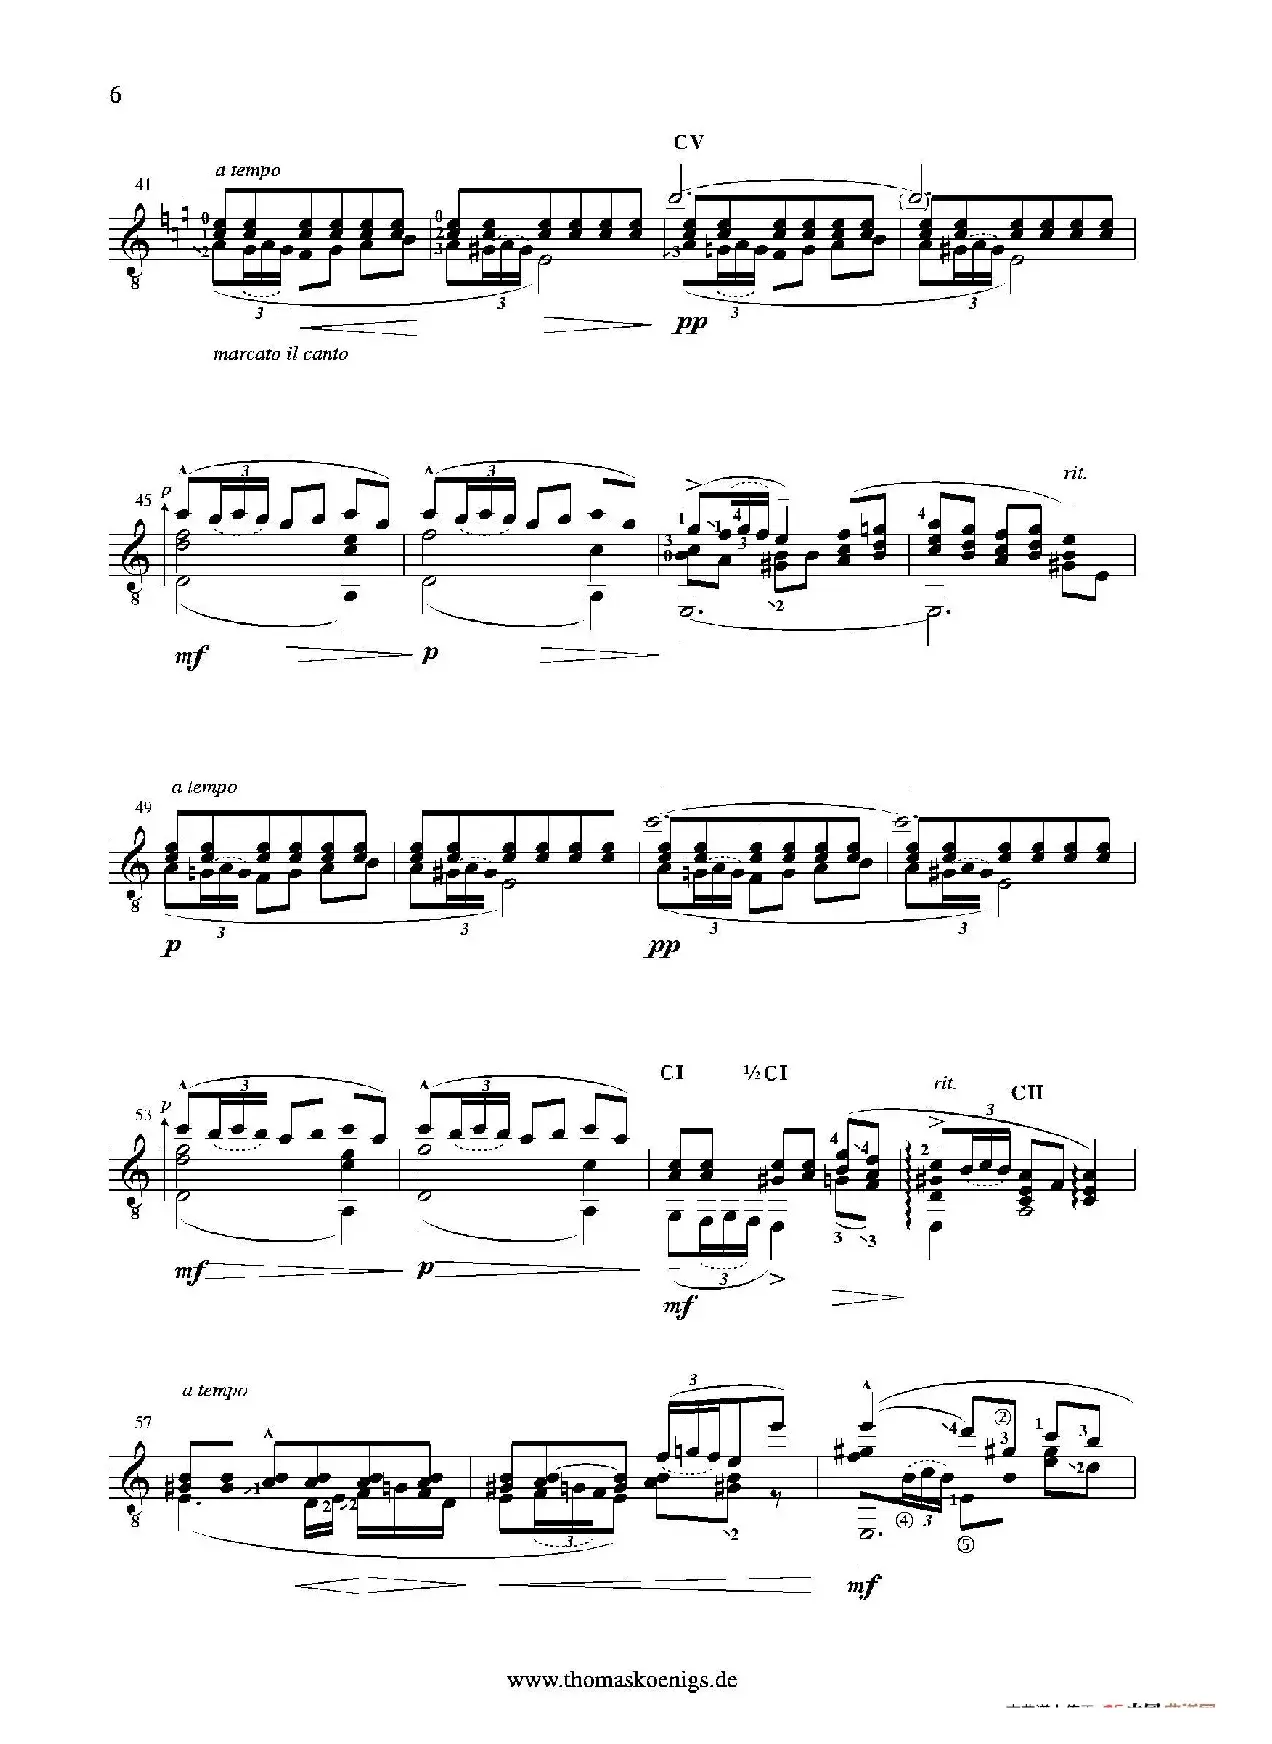 Serenata Espanola Op.181(Besser bekannt als Cadiz der Suite espanola op.47)（古典吉他）